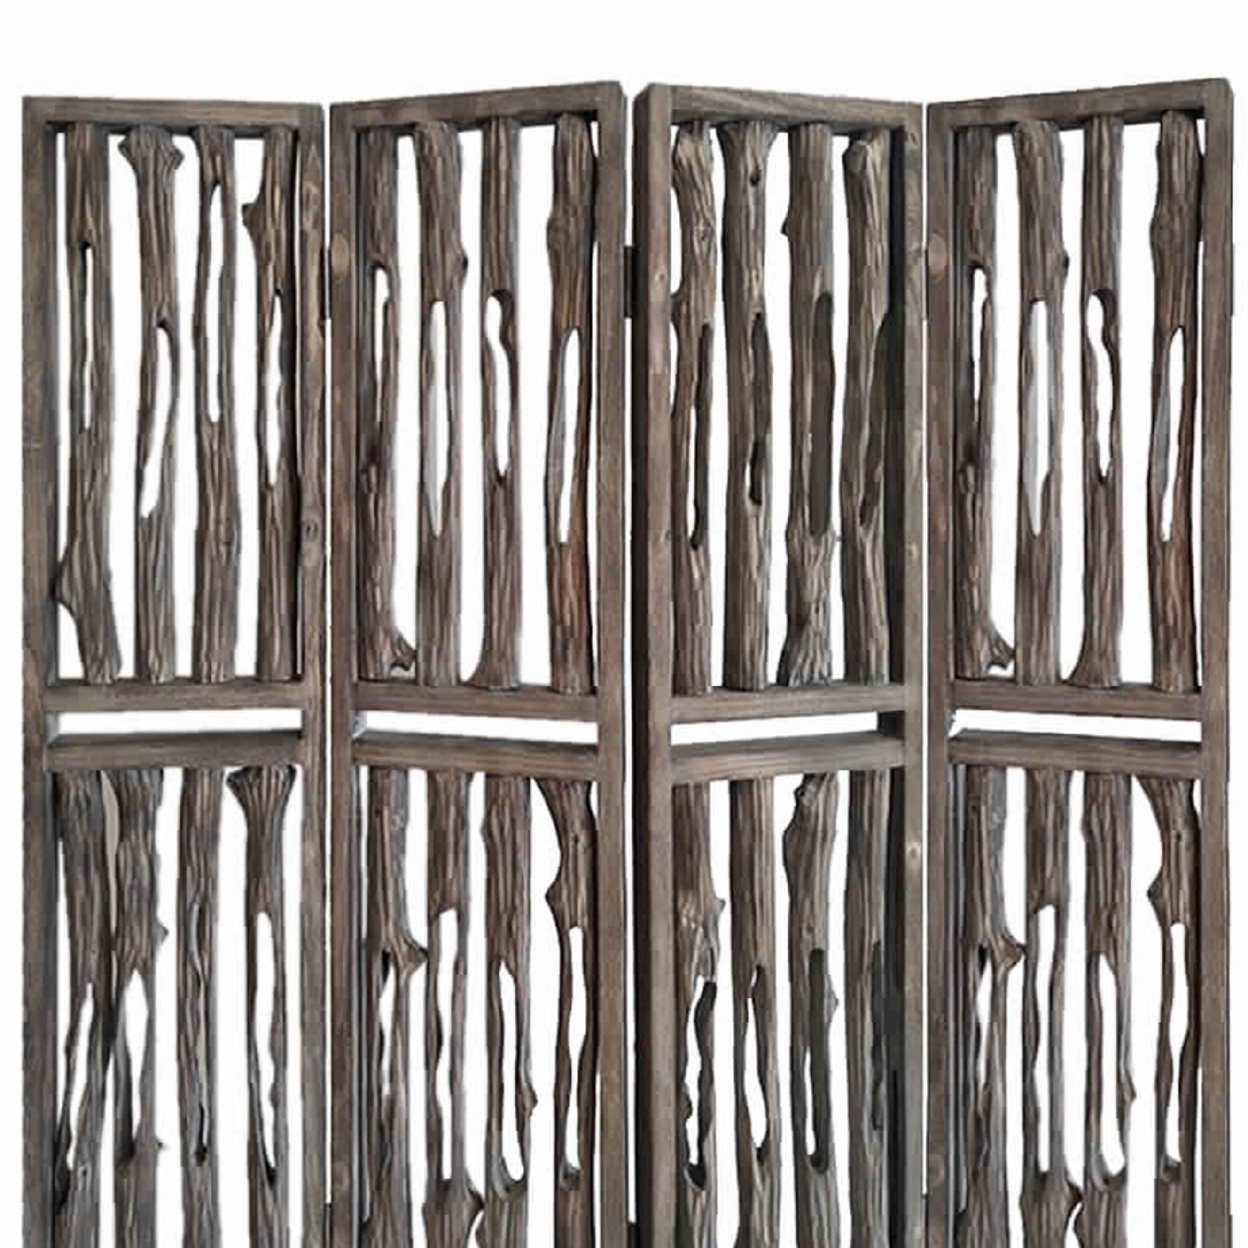 Contemporary 4 Panel Wooden Screen With Log Design, Brown- Saltoro Sherpi